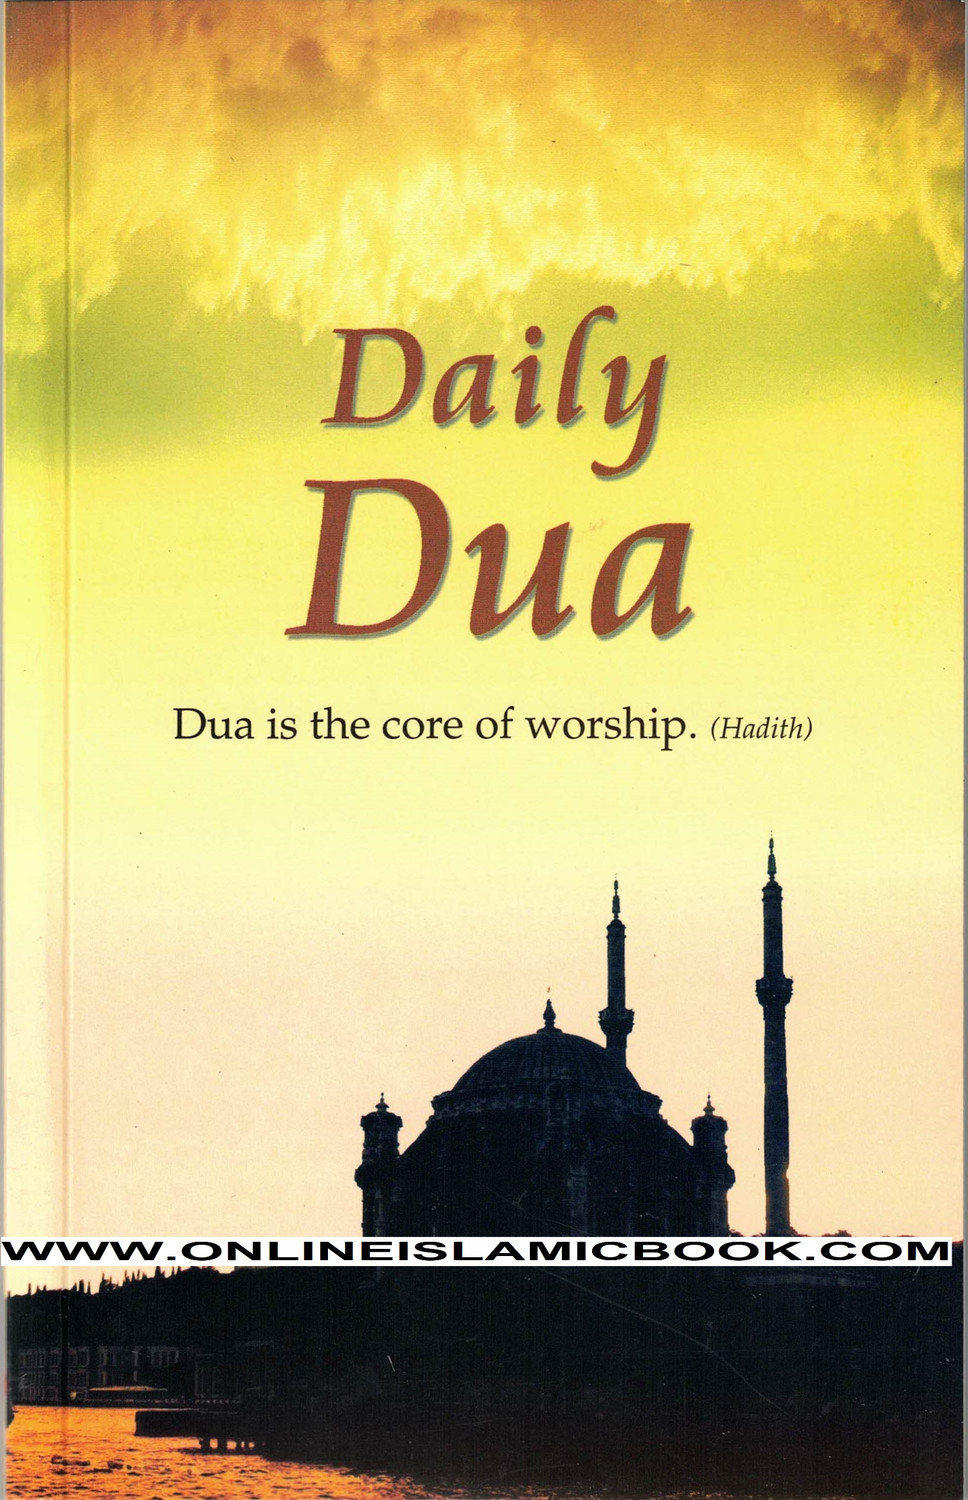 Daily Dua (English-Arabic) Supplications,9788178984469,8178984469,